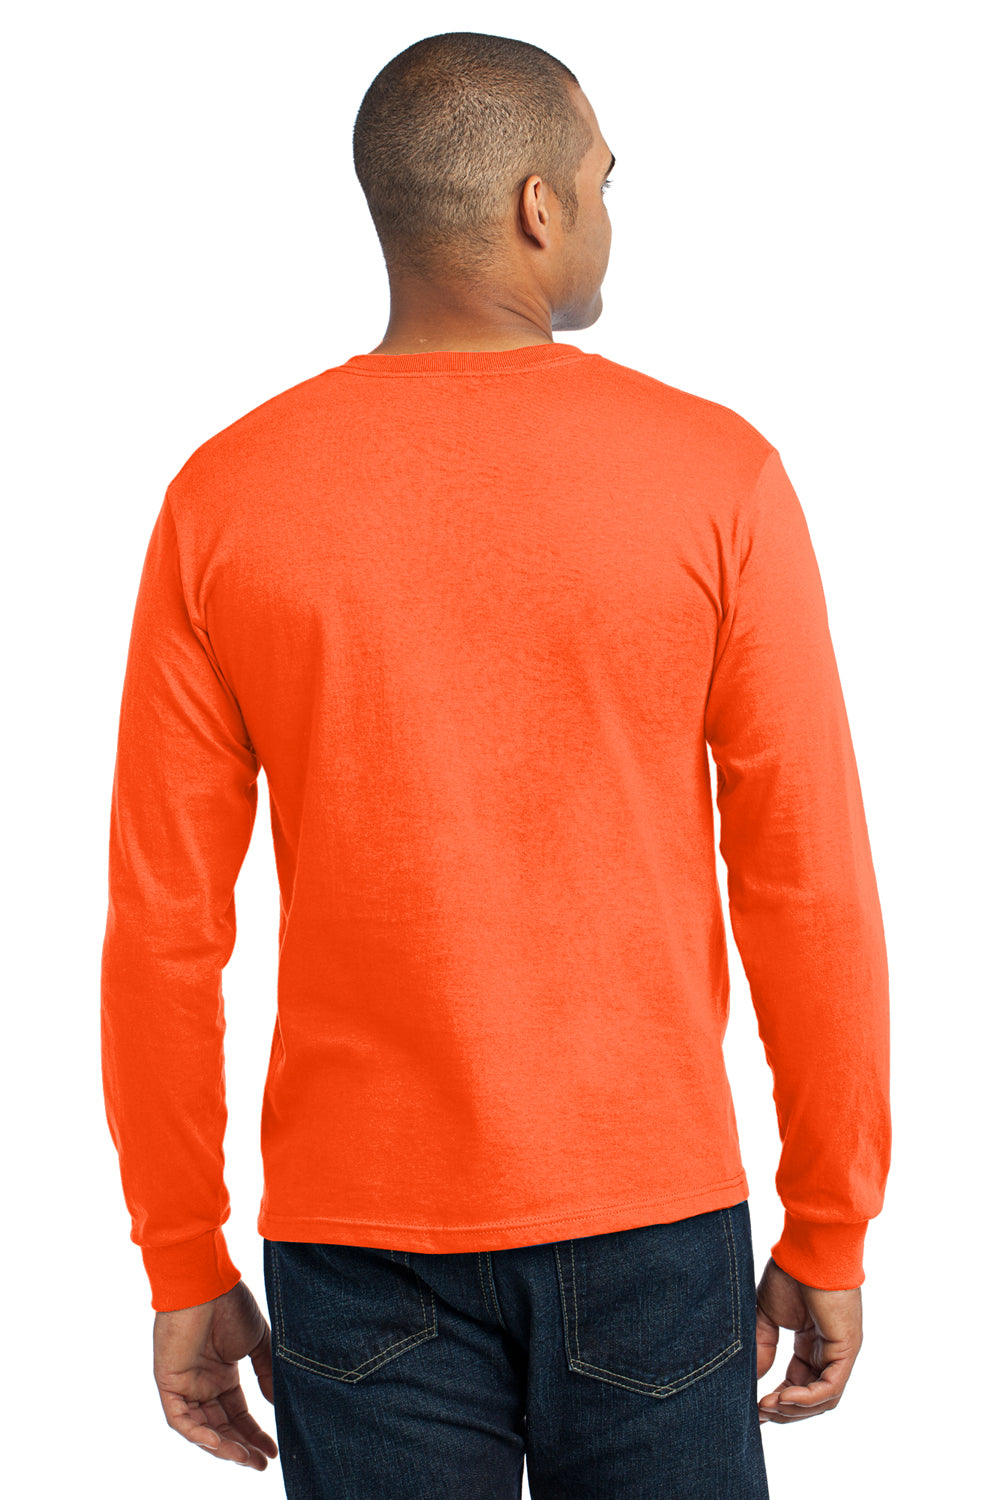 Port & Company USA100LS Mens USA Made Long Sleeve Crewneck T-Shirt Safety Orange Back